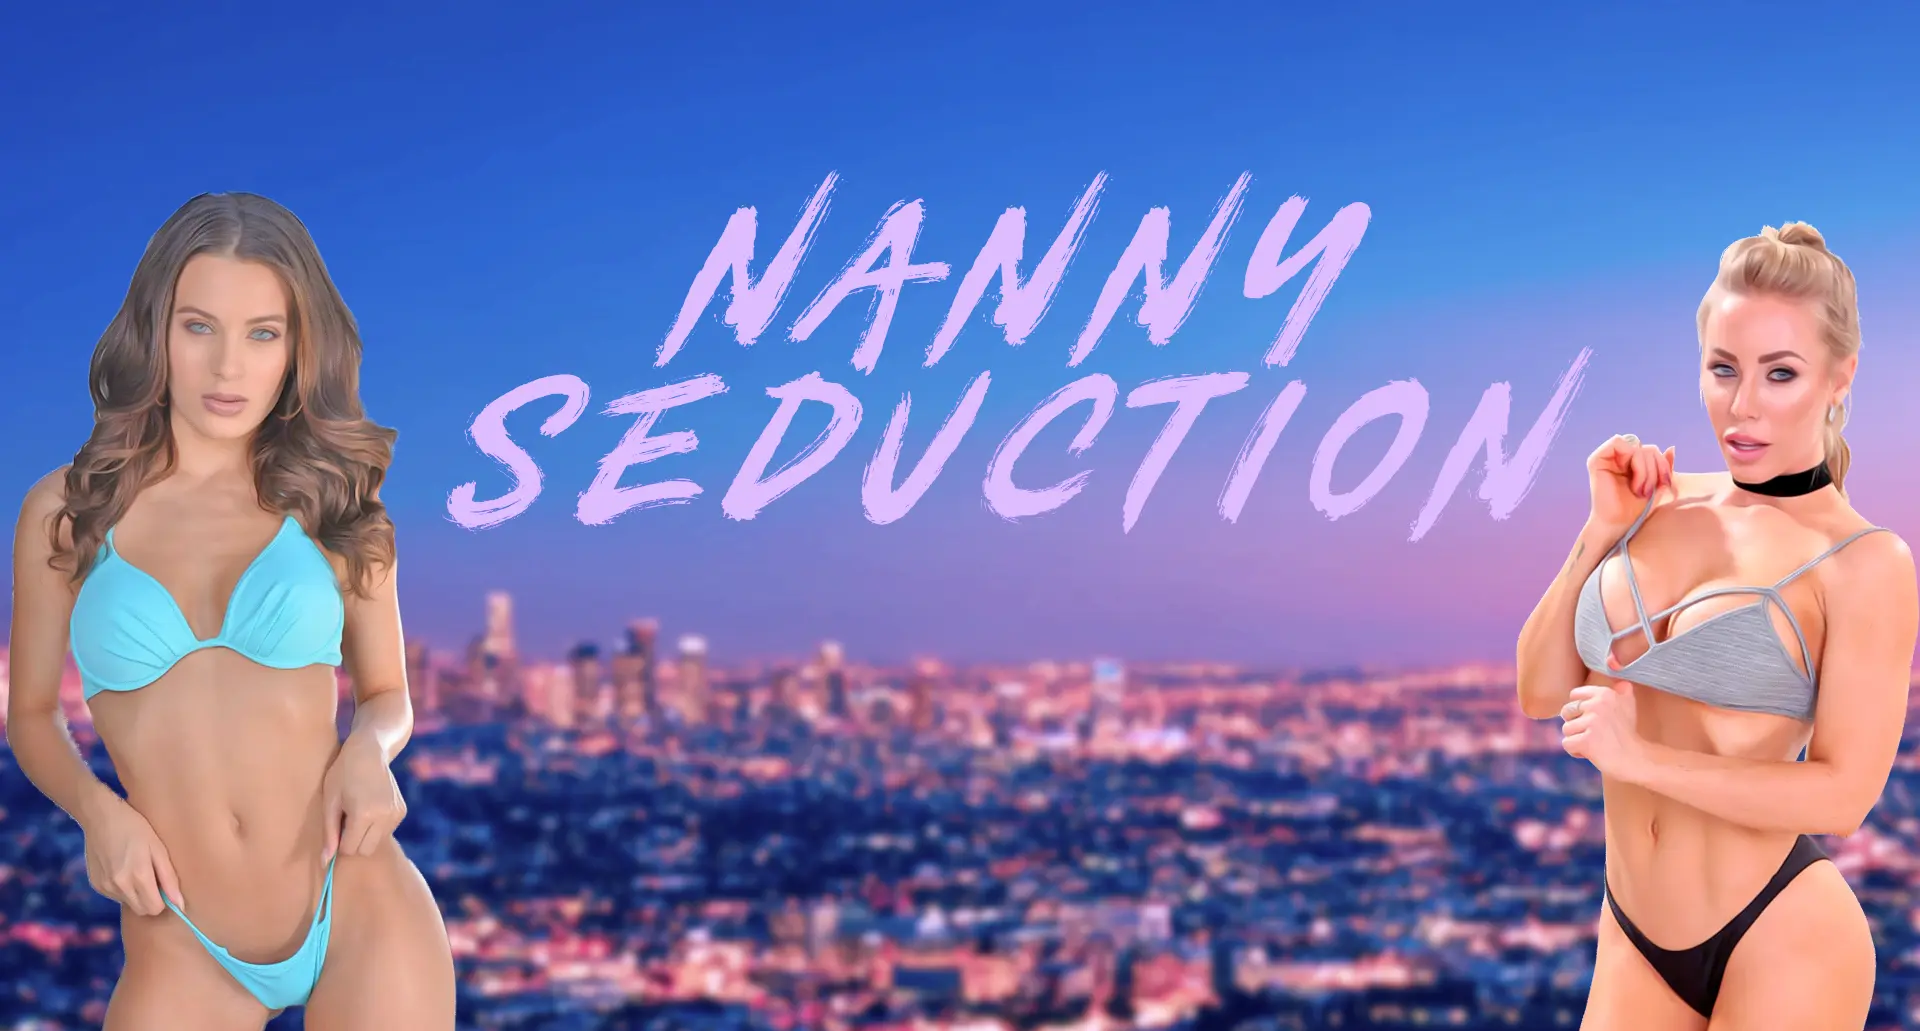 Nanny Seduction main image